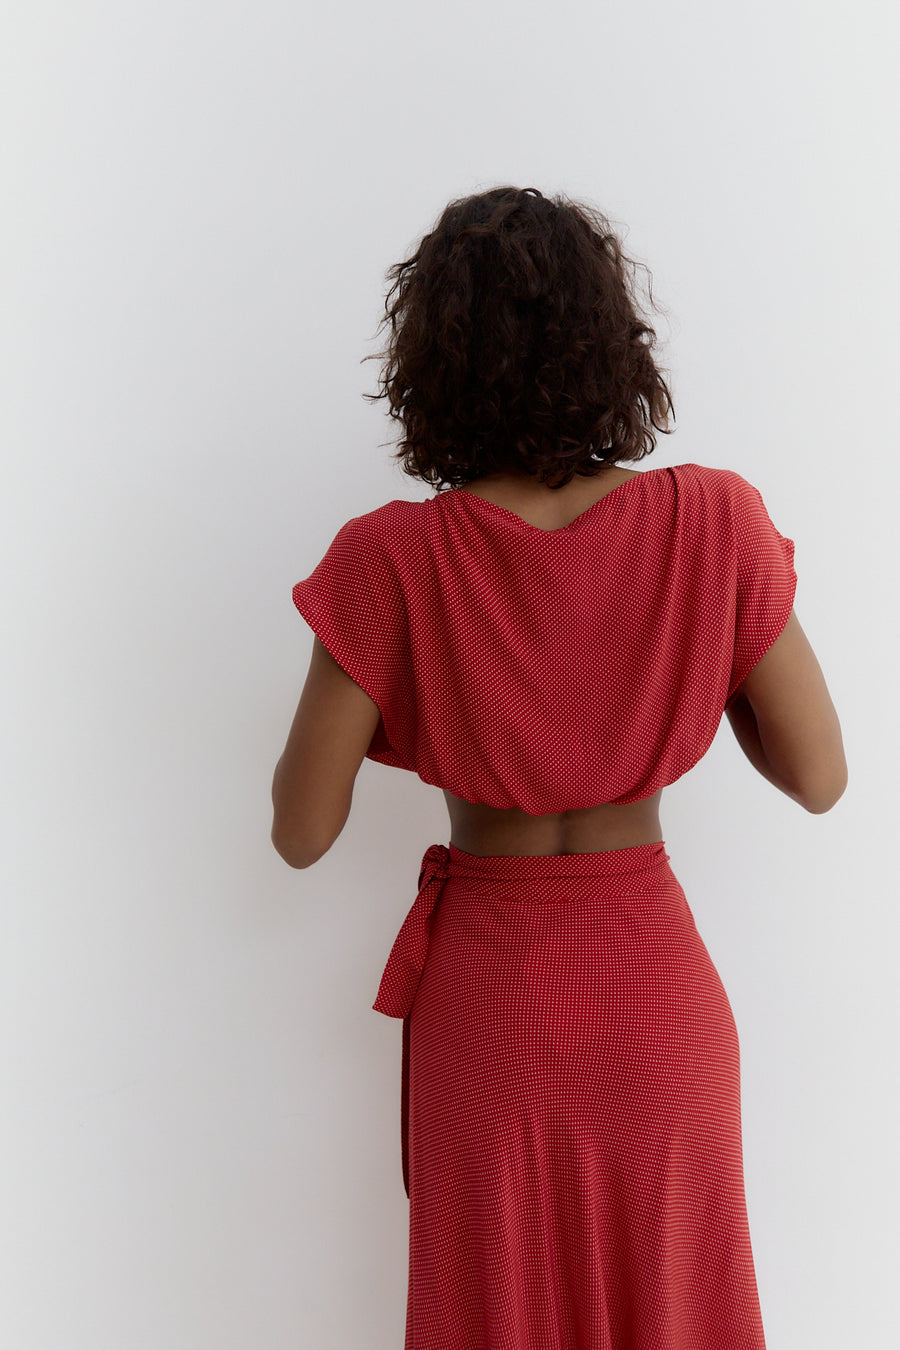 Meij-Adina Top (polka dots red), elastic waist band, short sleeves, loose cut, crop top, back view